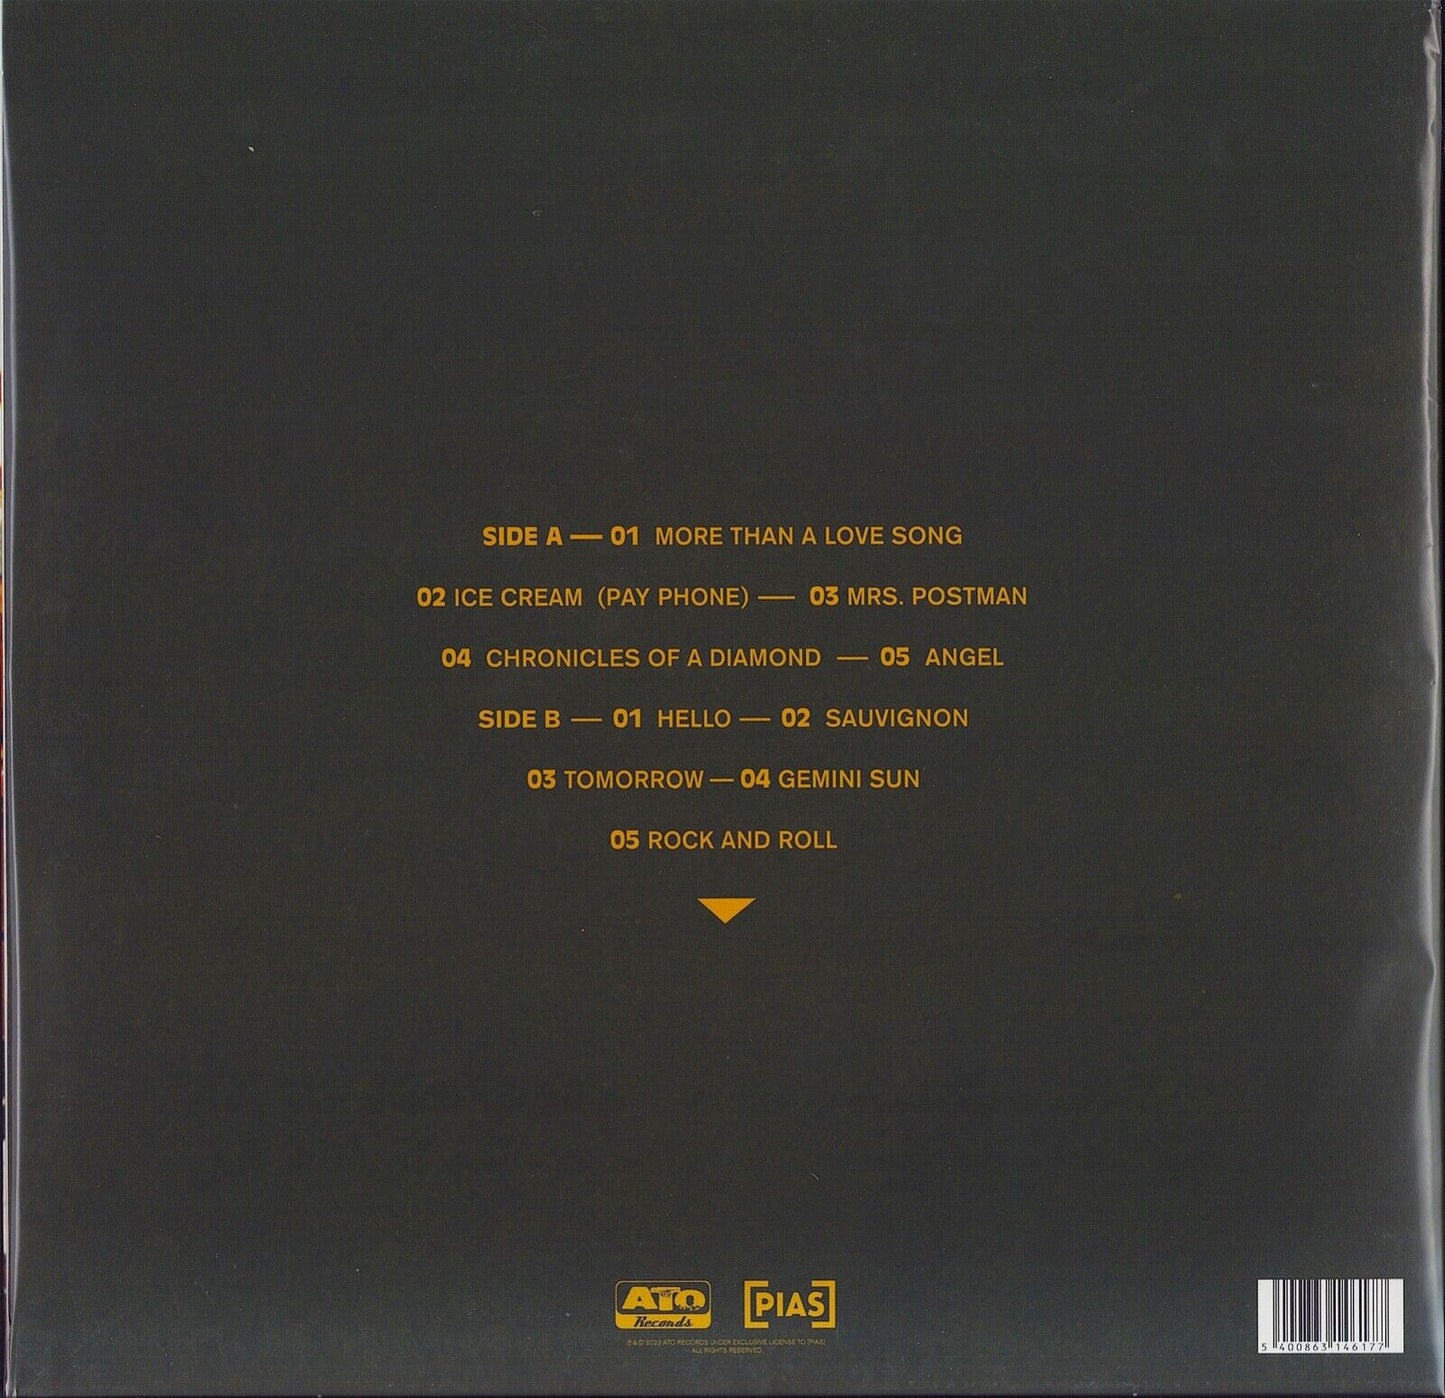 Black Pumas - Chronicles Of A Diamond Red Transparent Vinyl LP Limited Edition